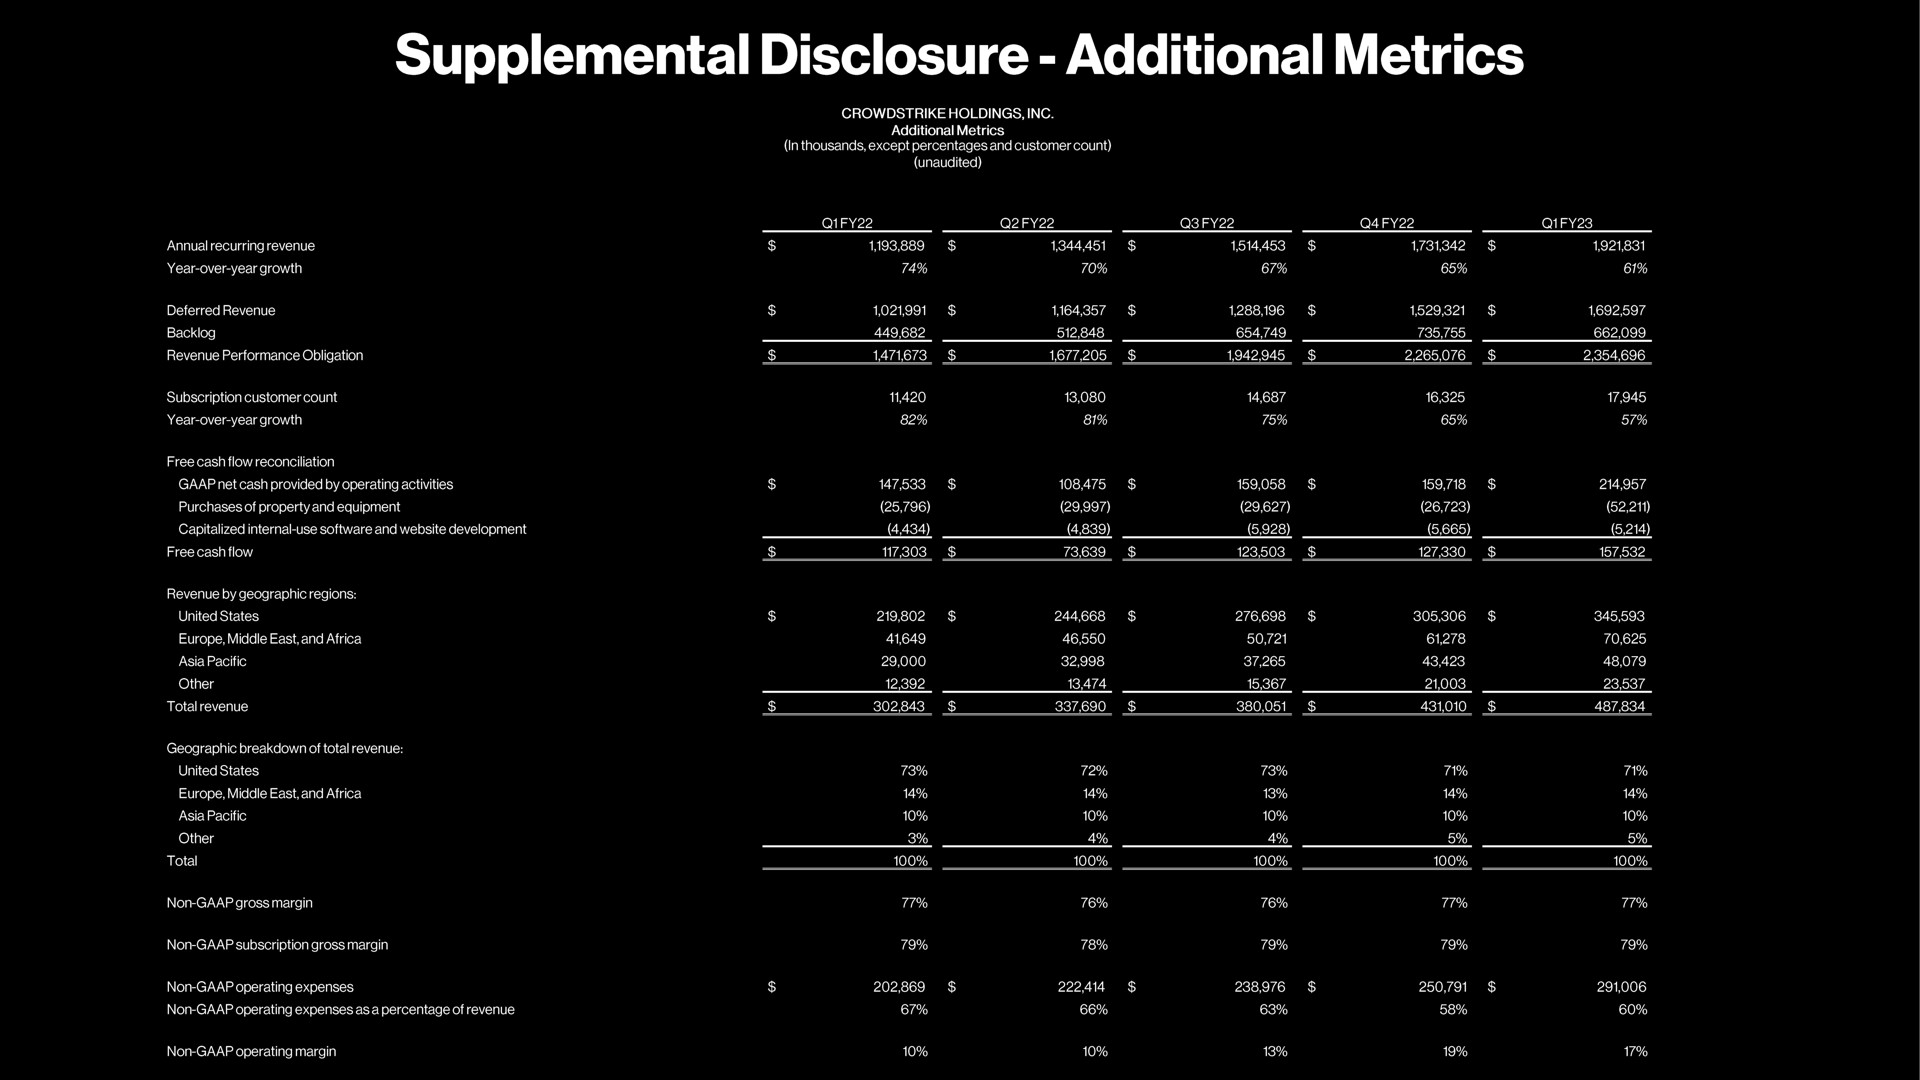 supplemental disclosure additional metrics | Crowdstrike